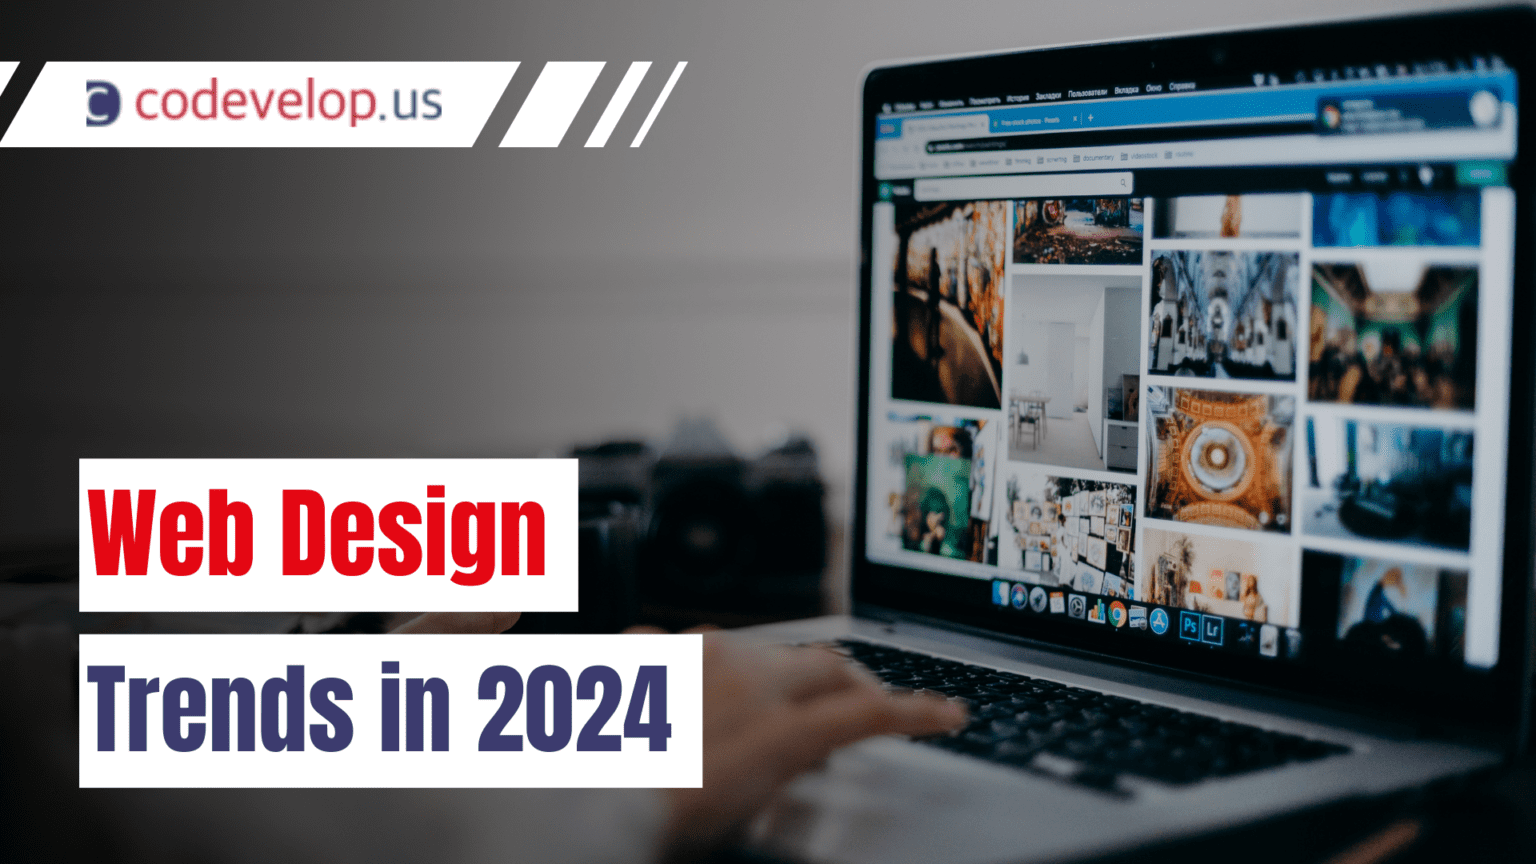 Web Design Trends for 2024